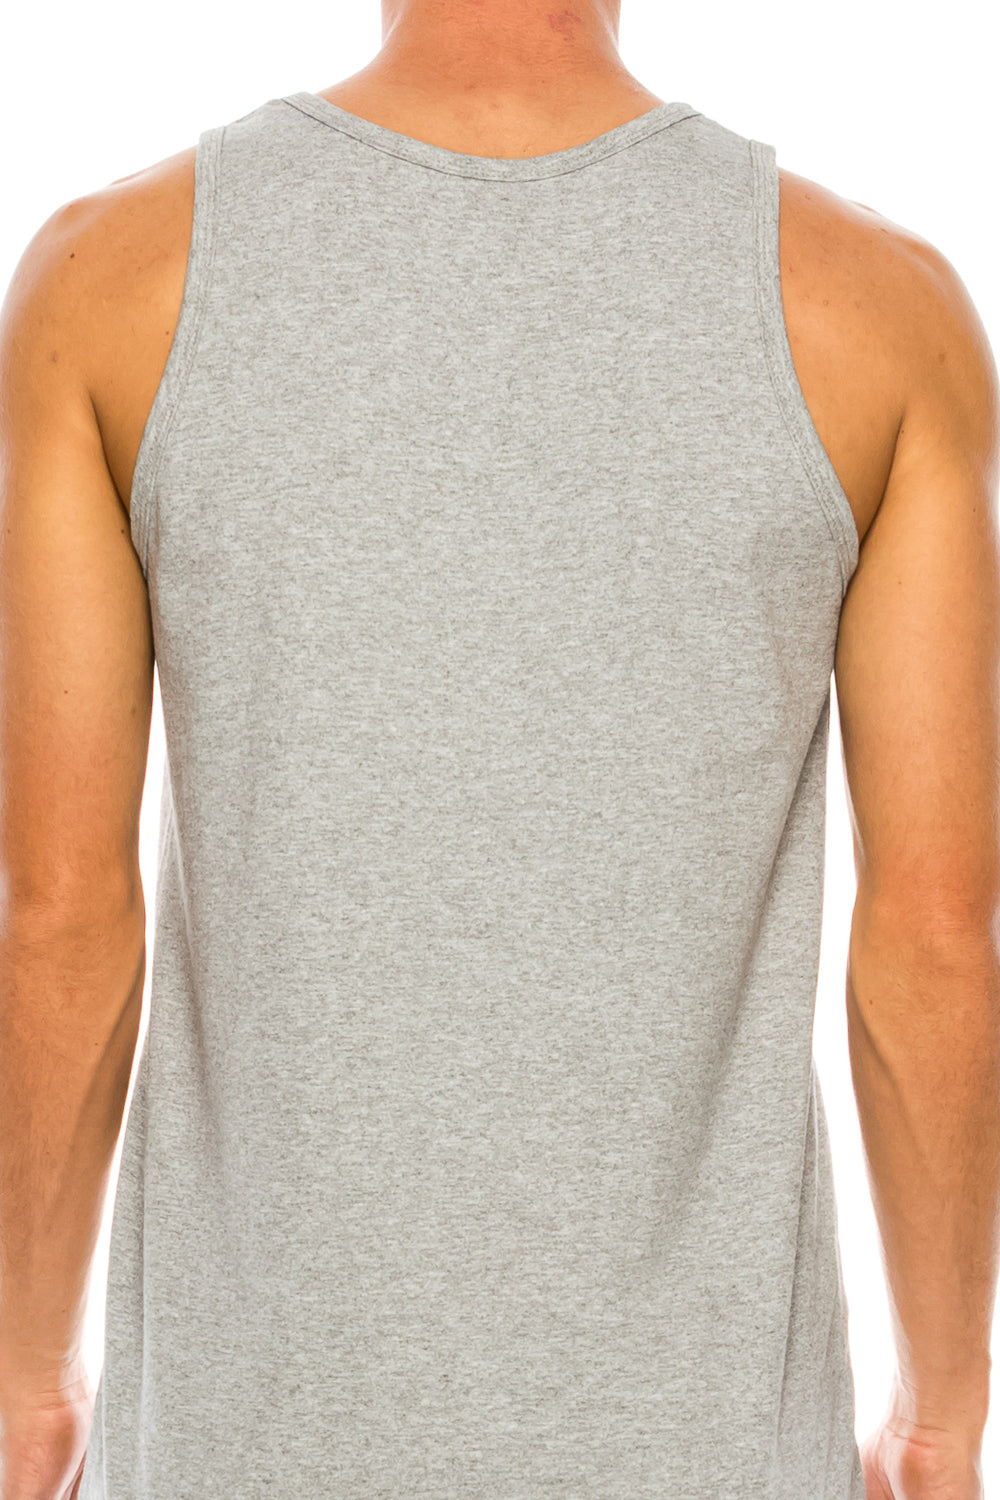 Shaka Wear 6.0 oz Active Short Sleeve T-Shirt (Black/White)